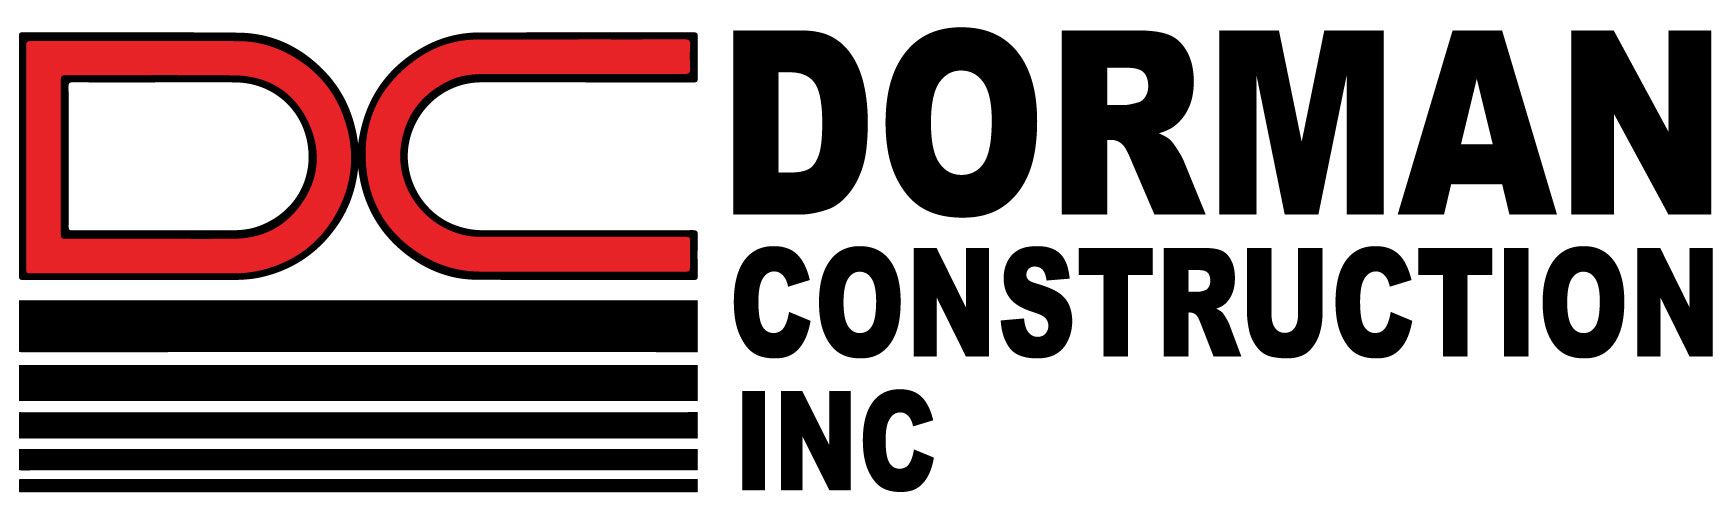 Dorman Construction